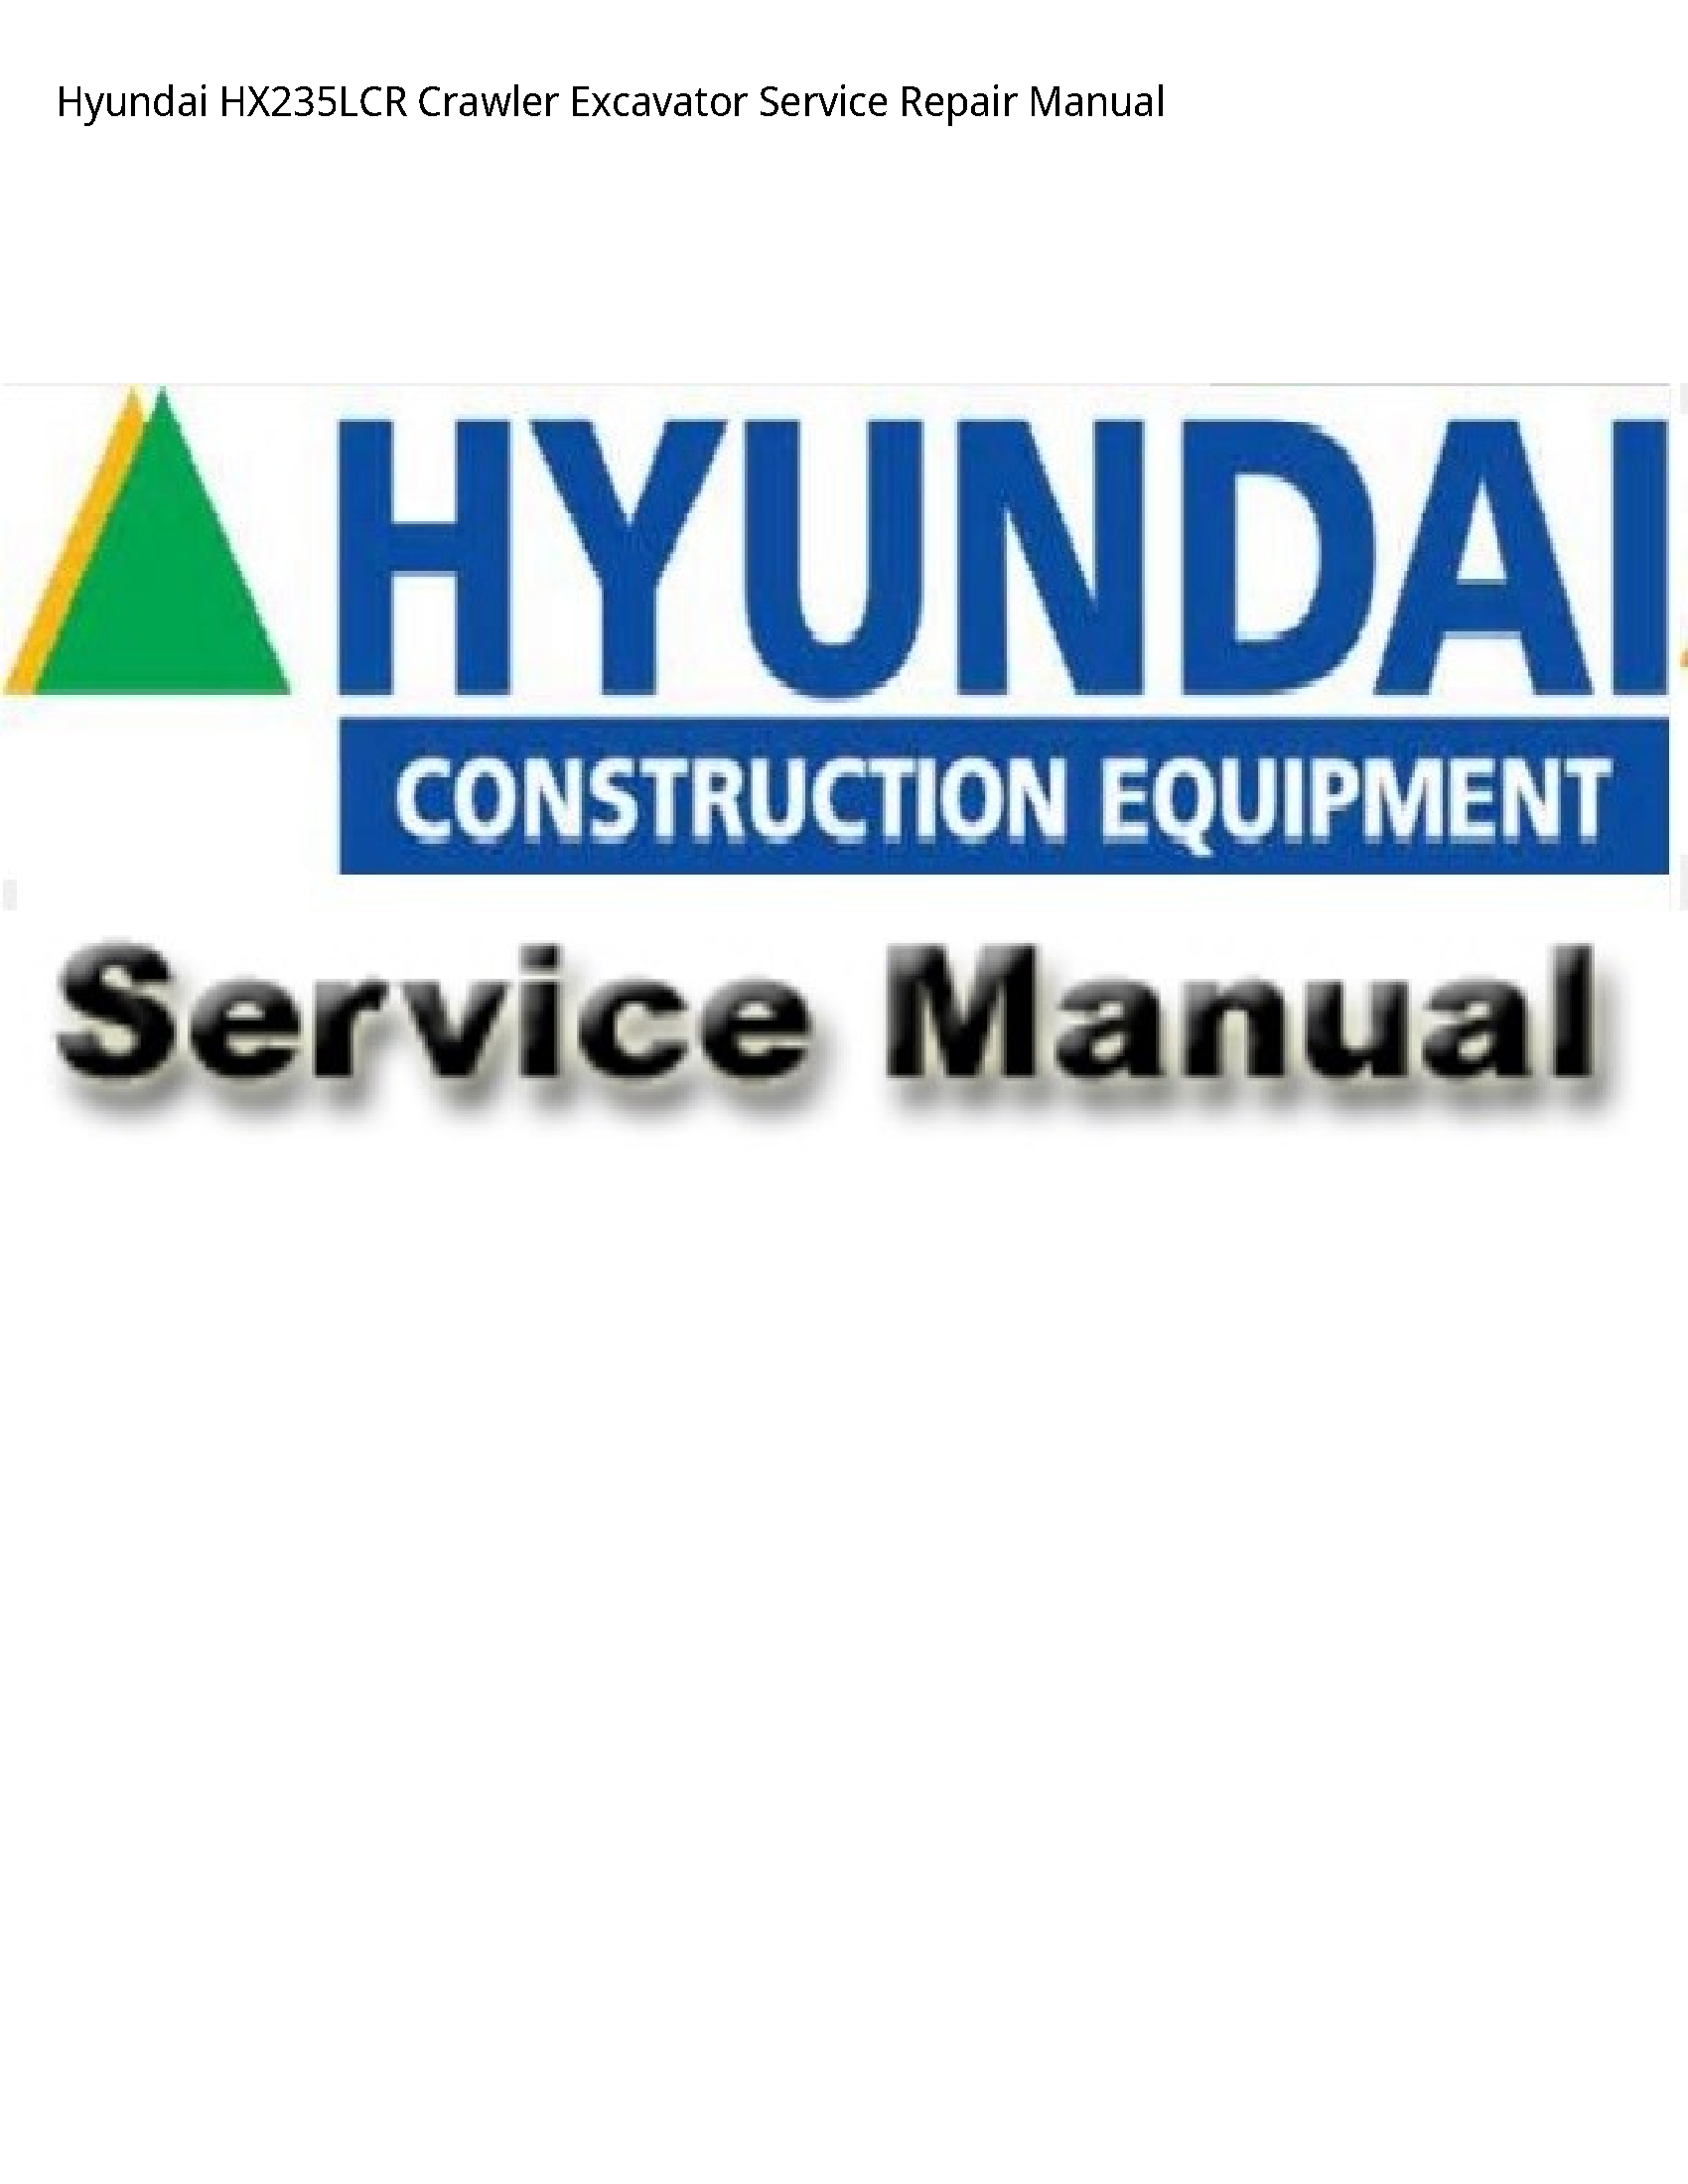 Hyundai HX235LCR Crawler Excavator manual